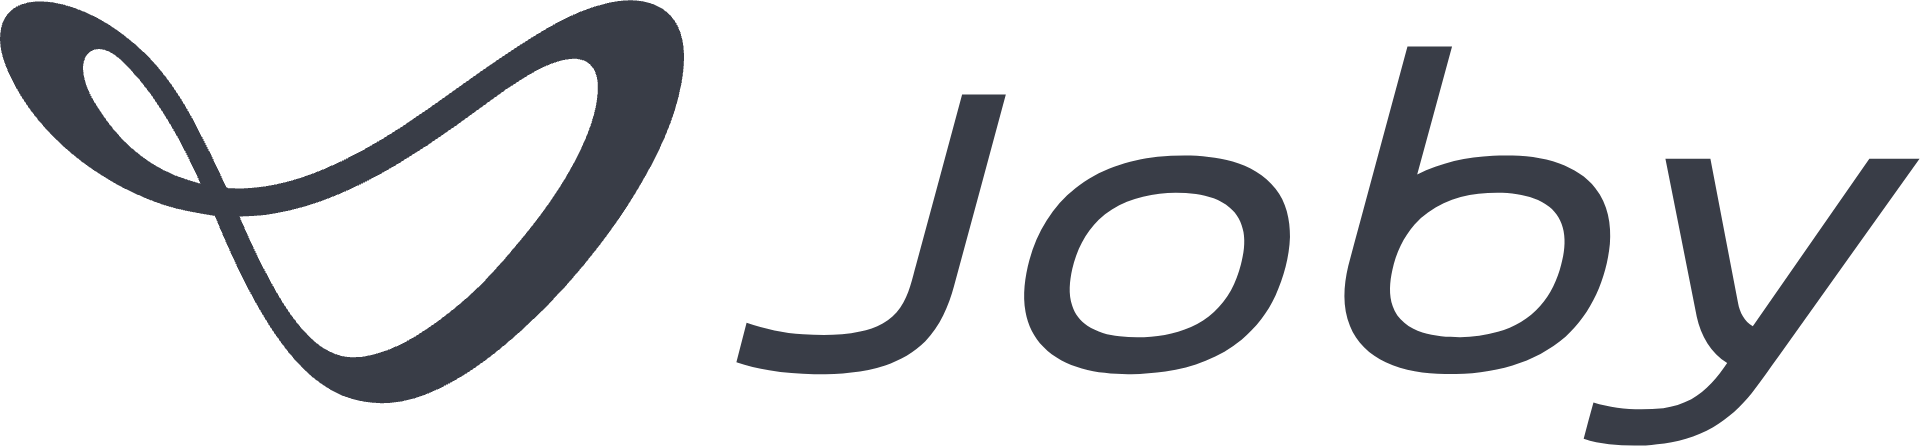 Joby Aviation logo large (transparent PNG)